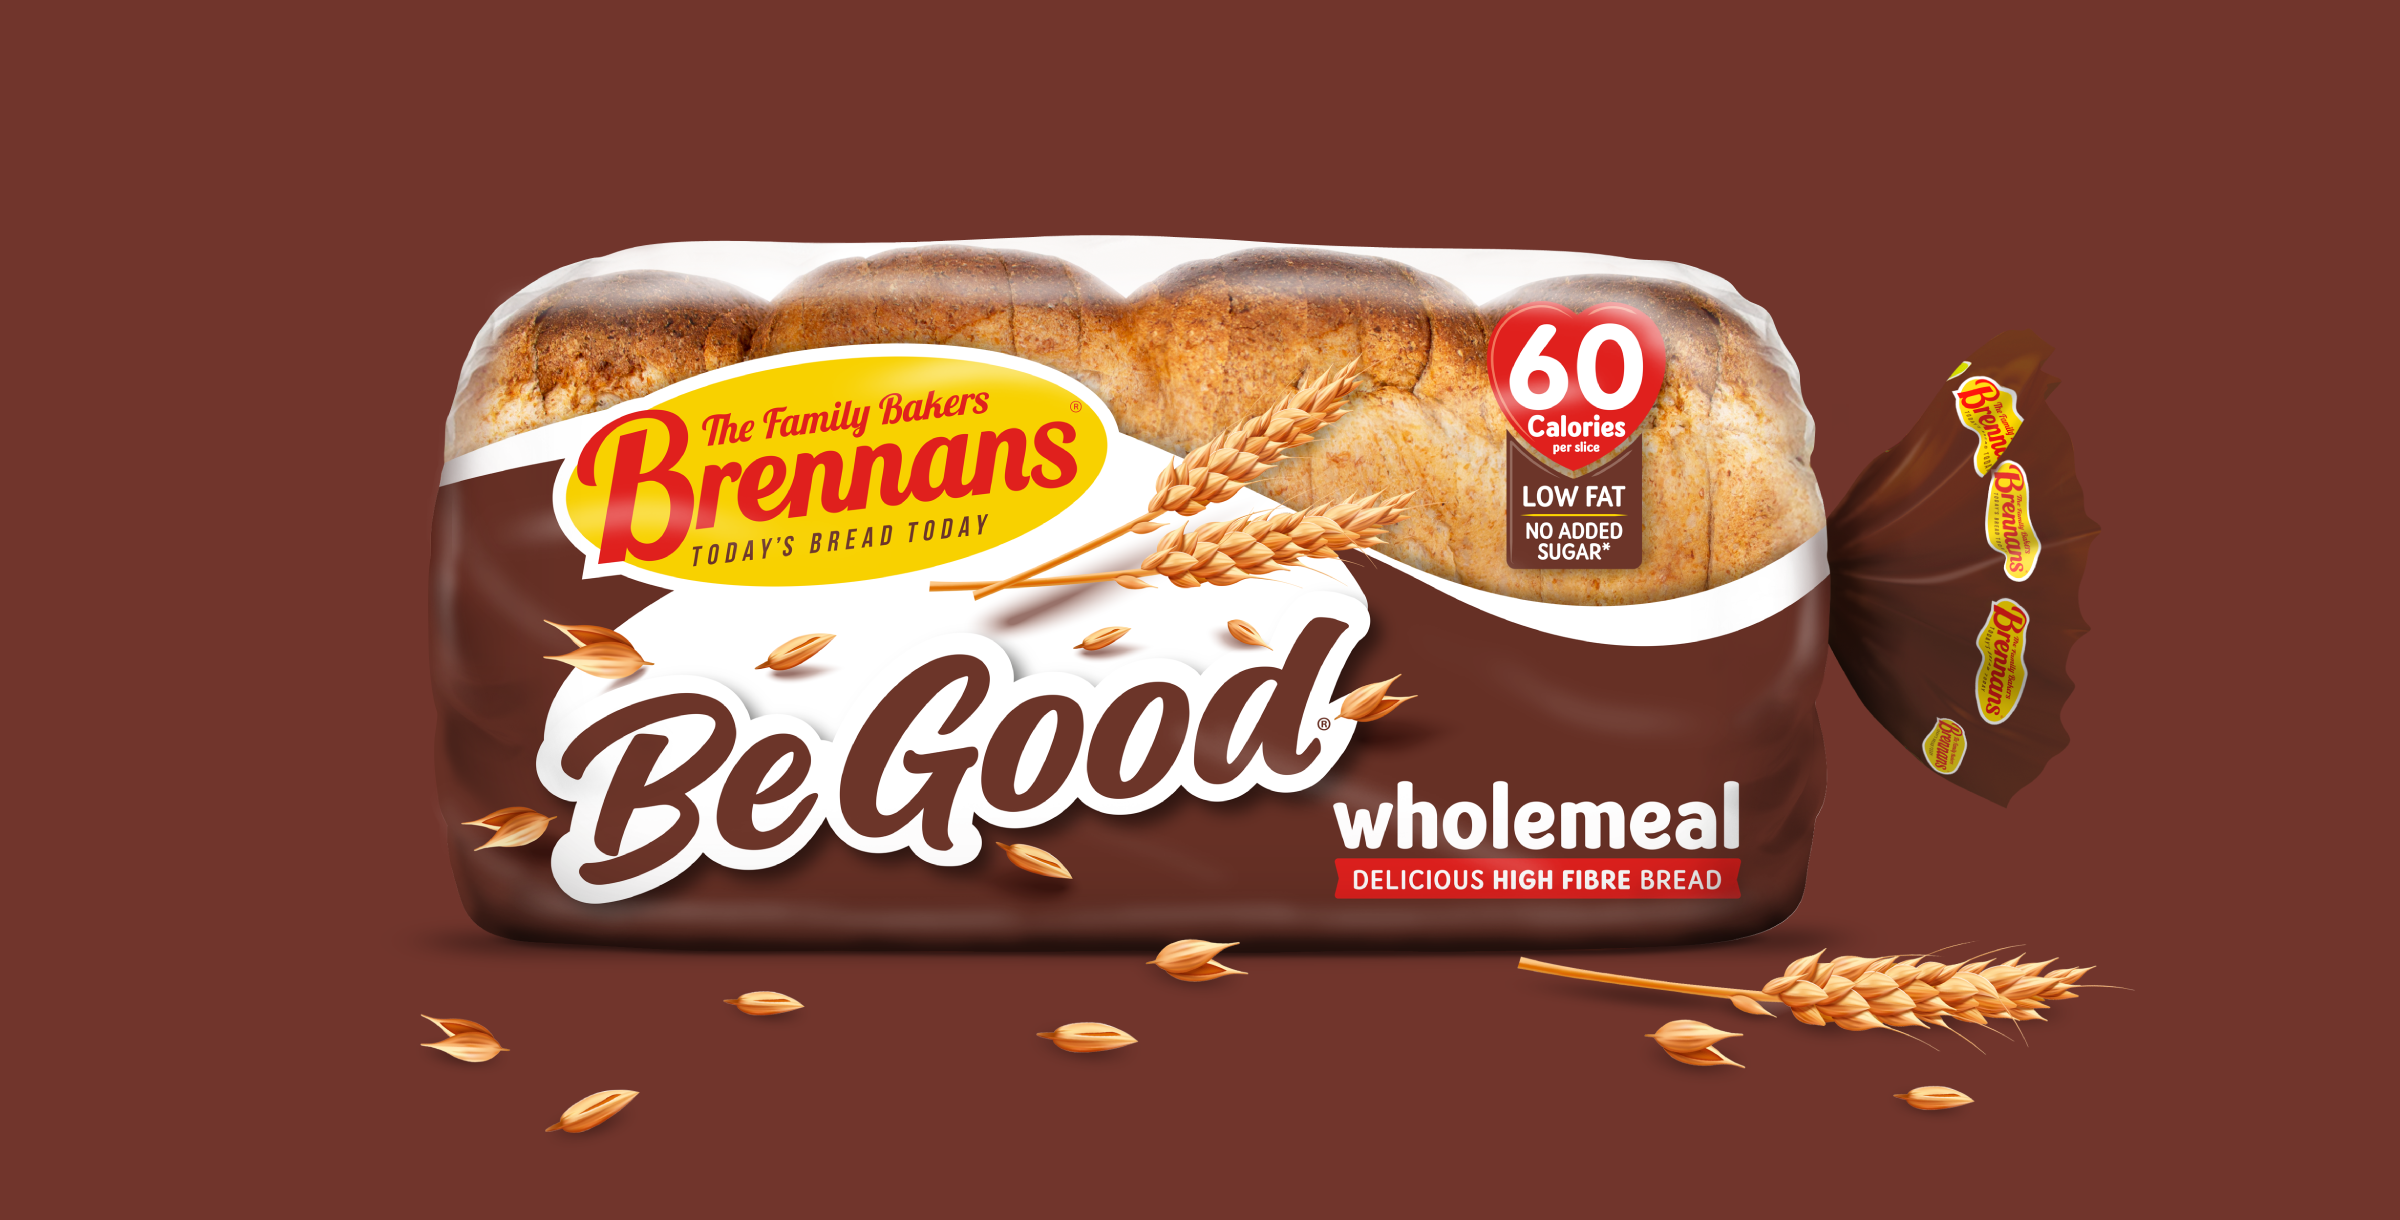 Brennans-BeGood-Wholemeal.png